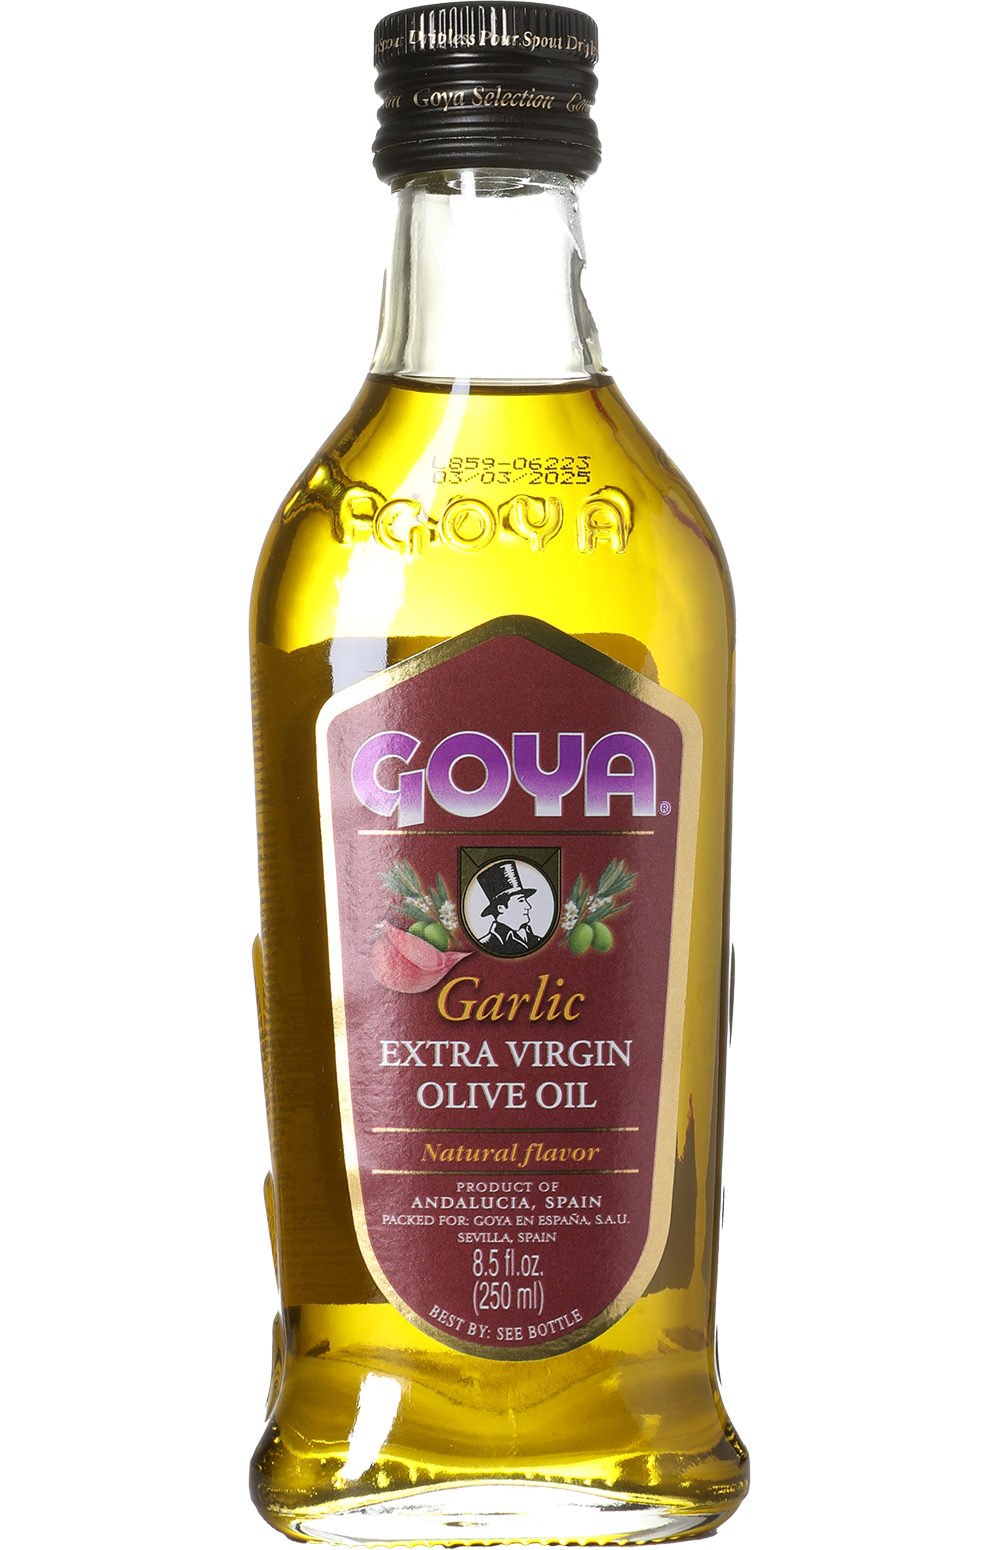 Goya Garlic Extra Virgin Olive Oil - Spain